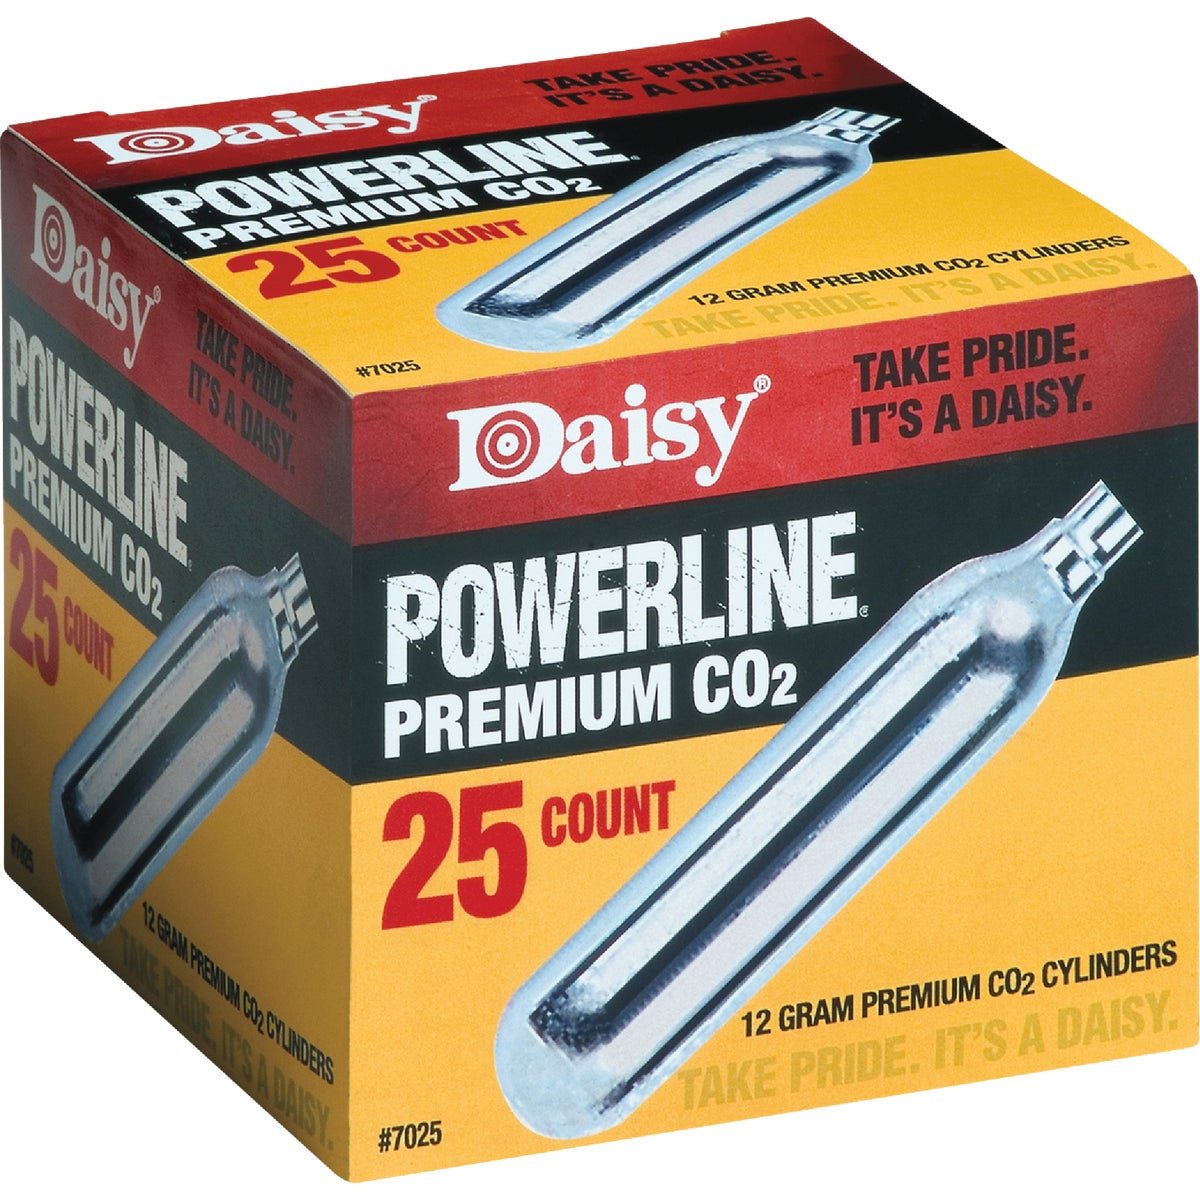 Daisy Powerline Premium 12 Grain CO2 Cylinders (25-Pack)